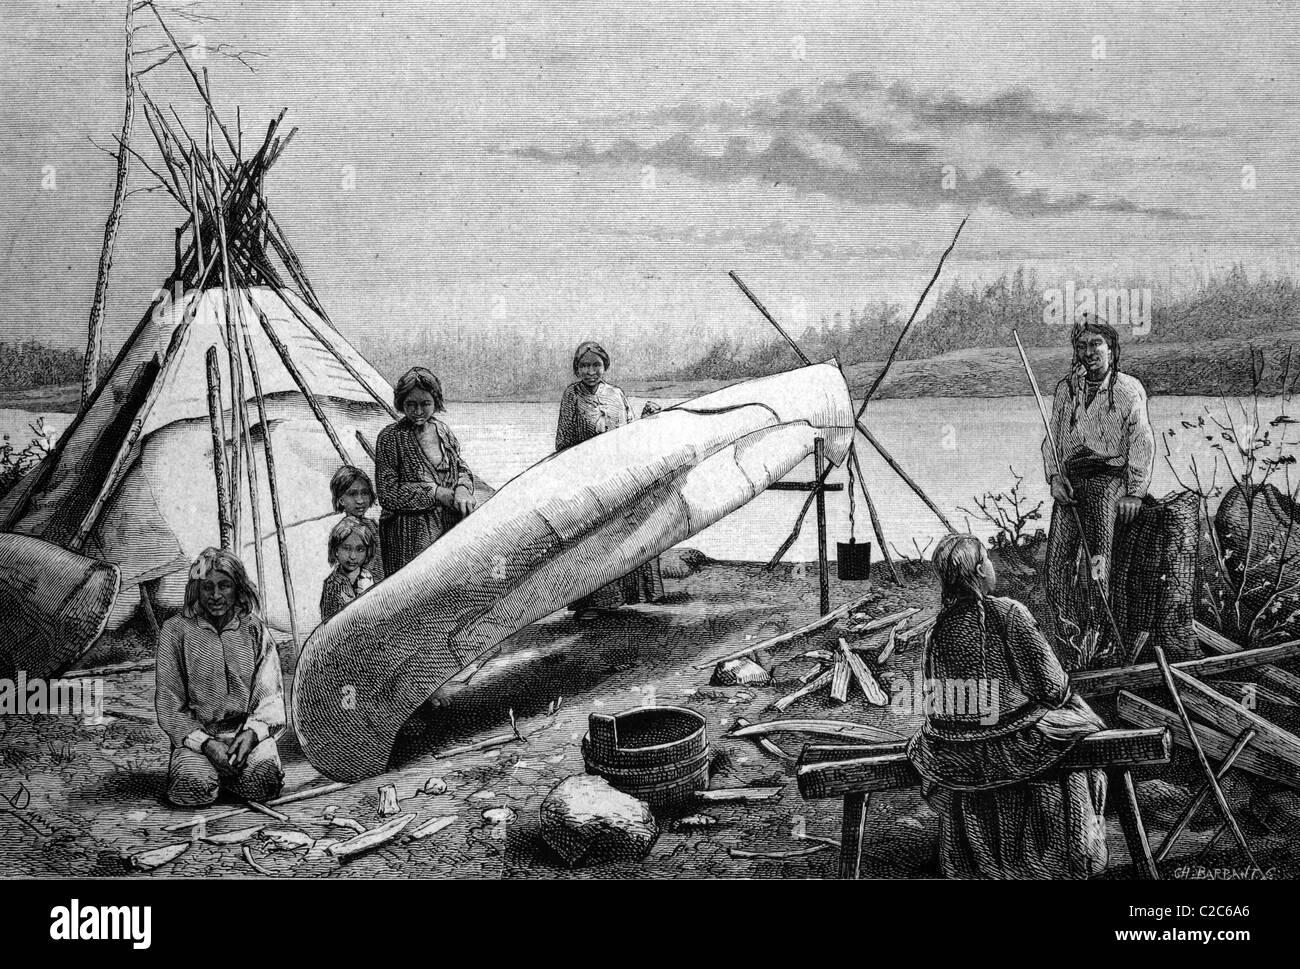 Anishinabe or Chippewa Indians repairing a boat, North America, historical illustration, circa 1886 Stock Photo